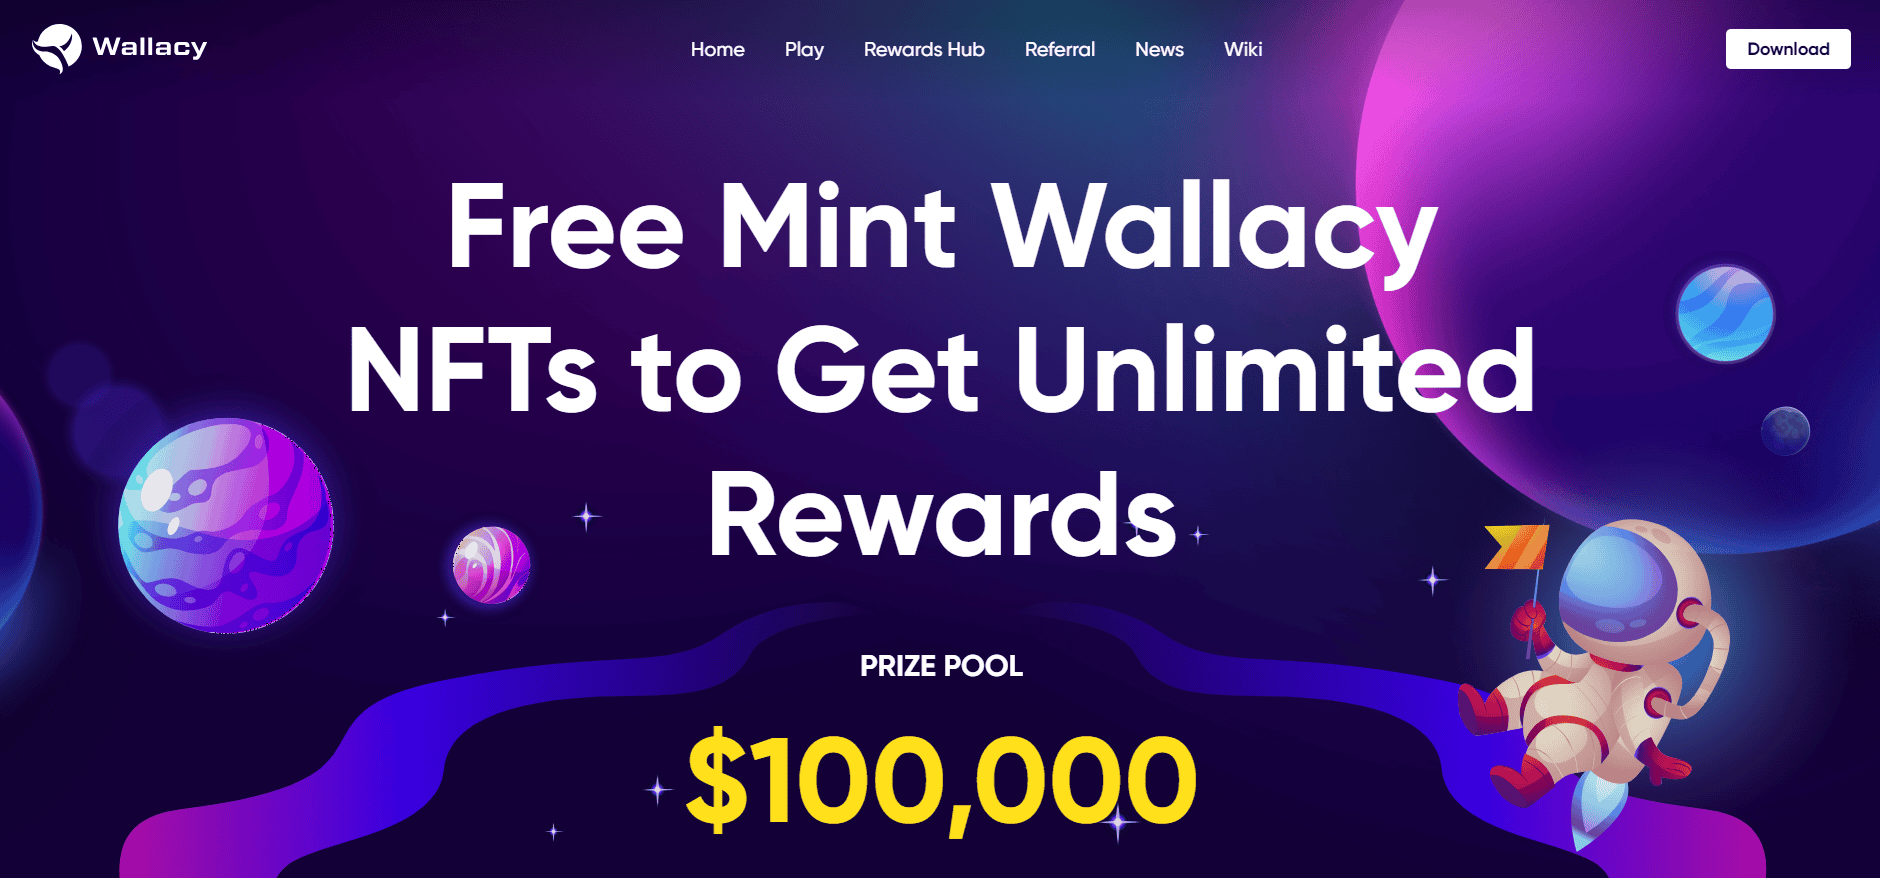 rewards hub screen.png